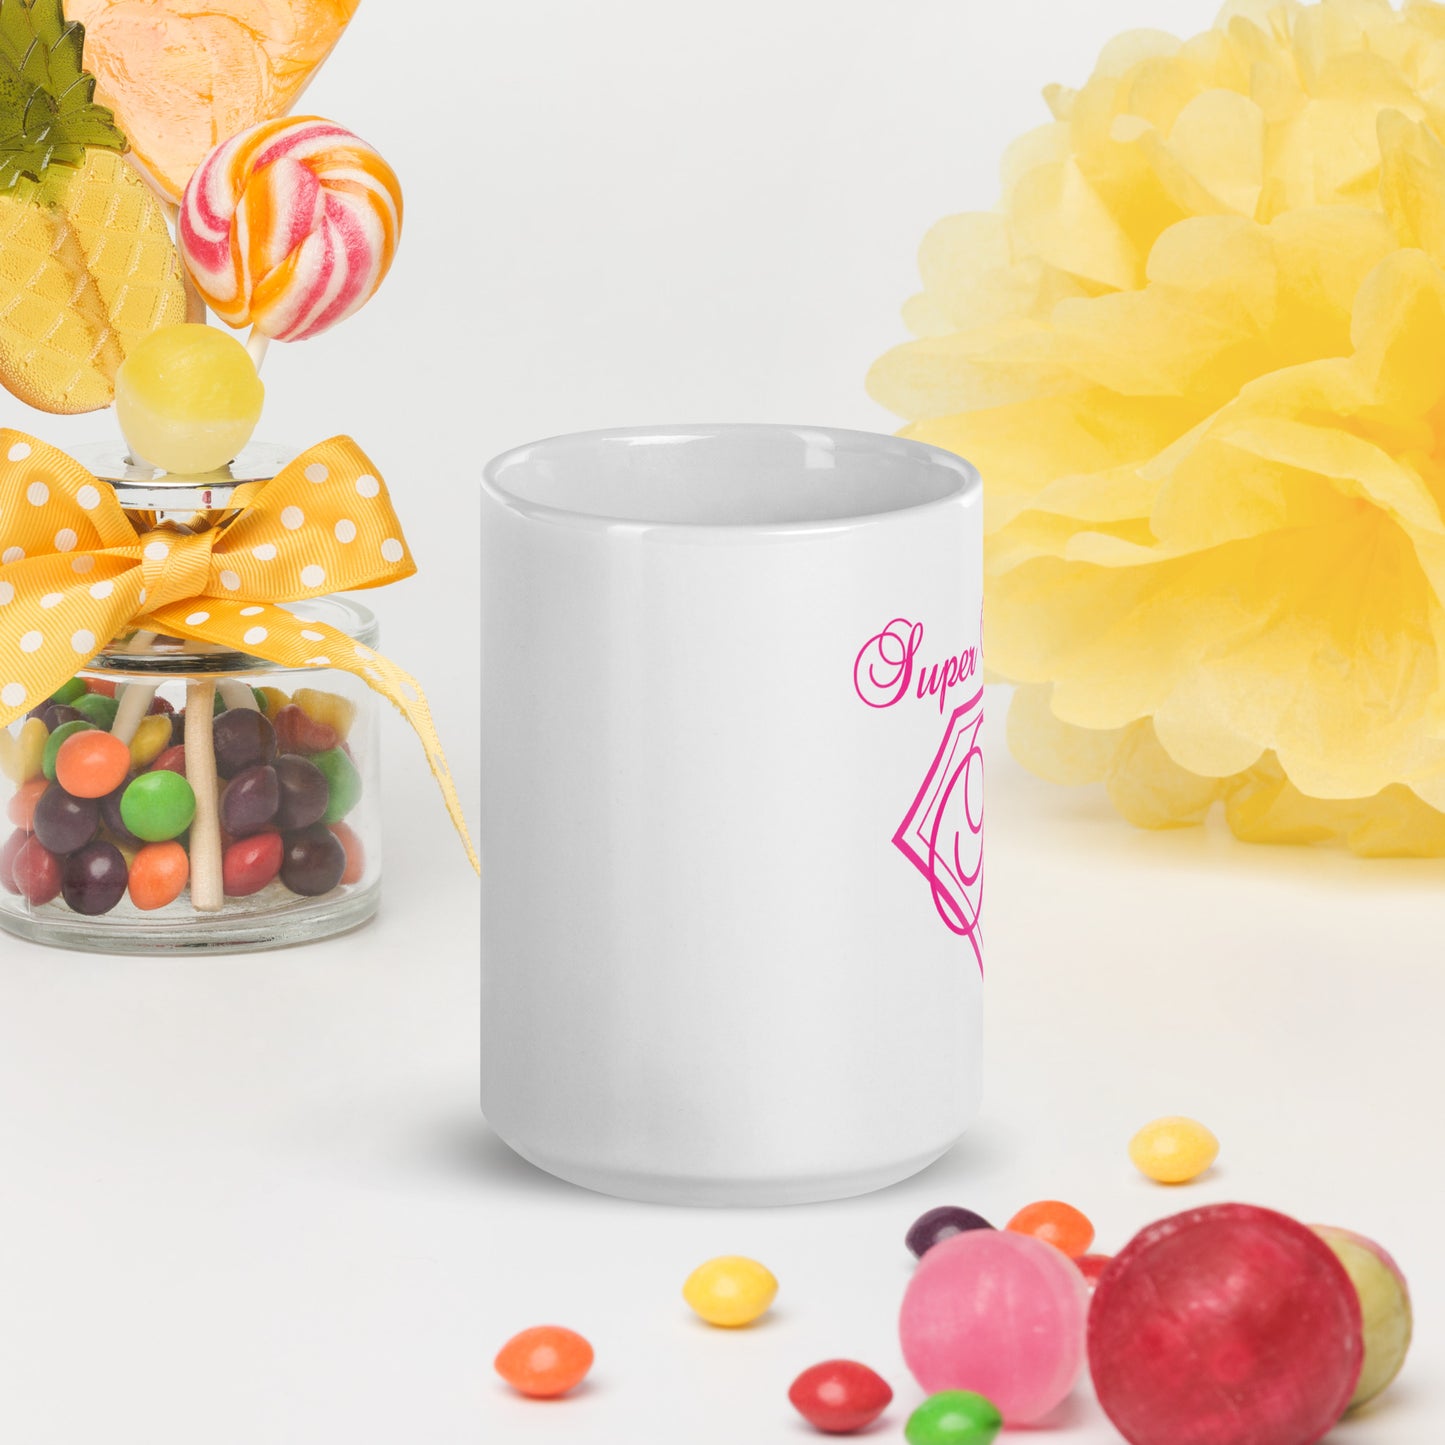 Super Meemaw white glossy mug - Pink Print